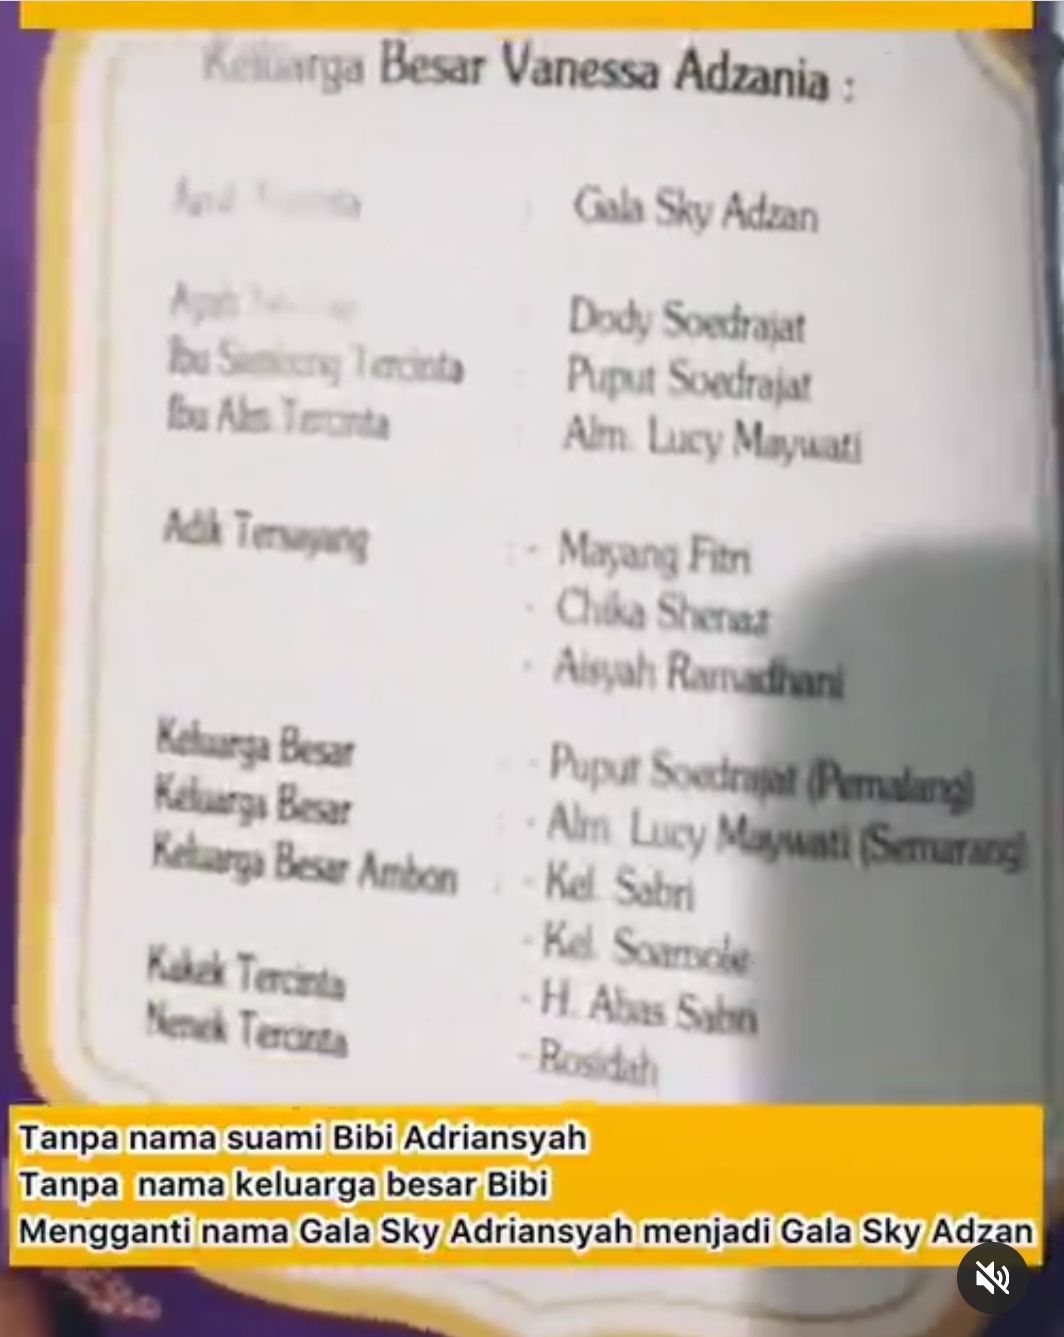 Selain Tak Menulis Nama Bibi Ardiansyah di Buku Yasin Vanessa Angel, Nama Gala Sky Juga Diubah